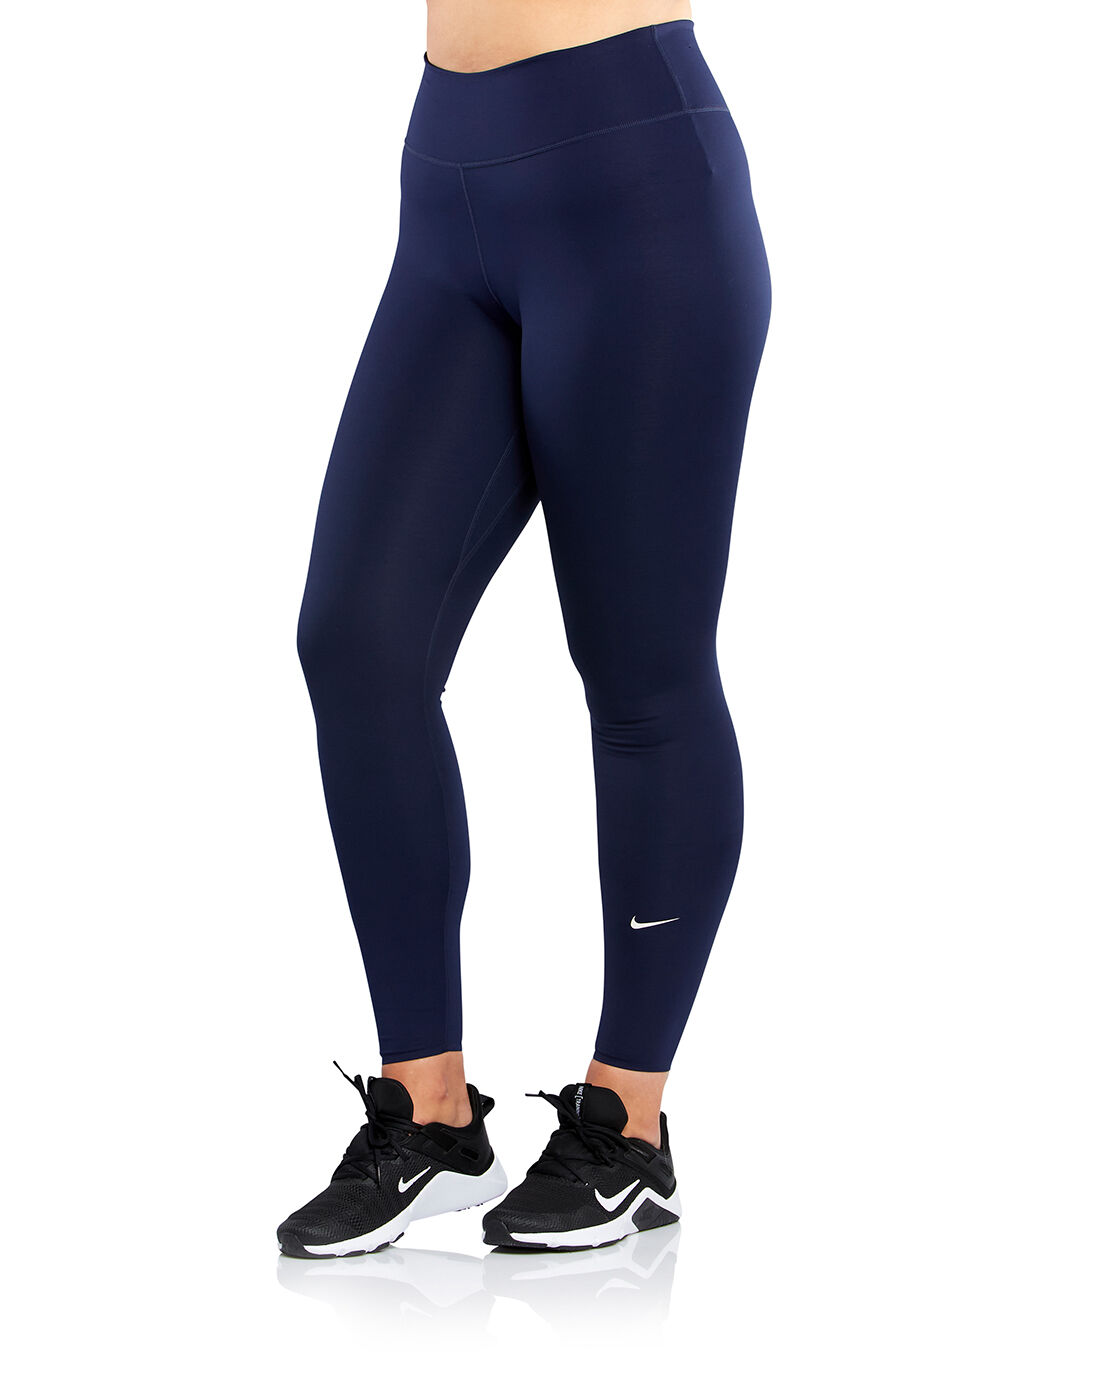 Nike Womens One Luxe Leggings - Navy 